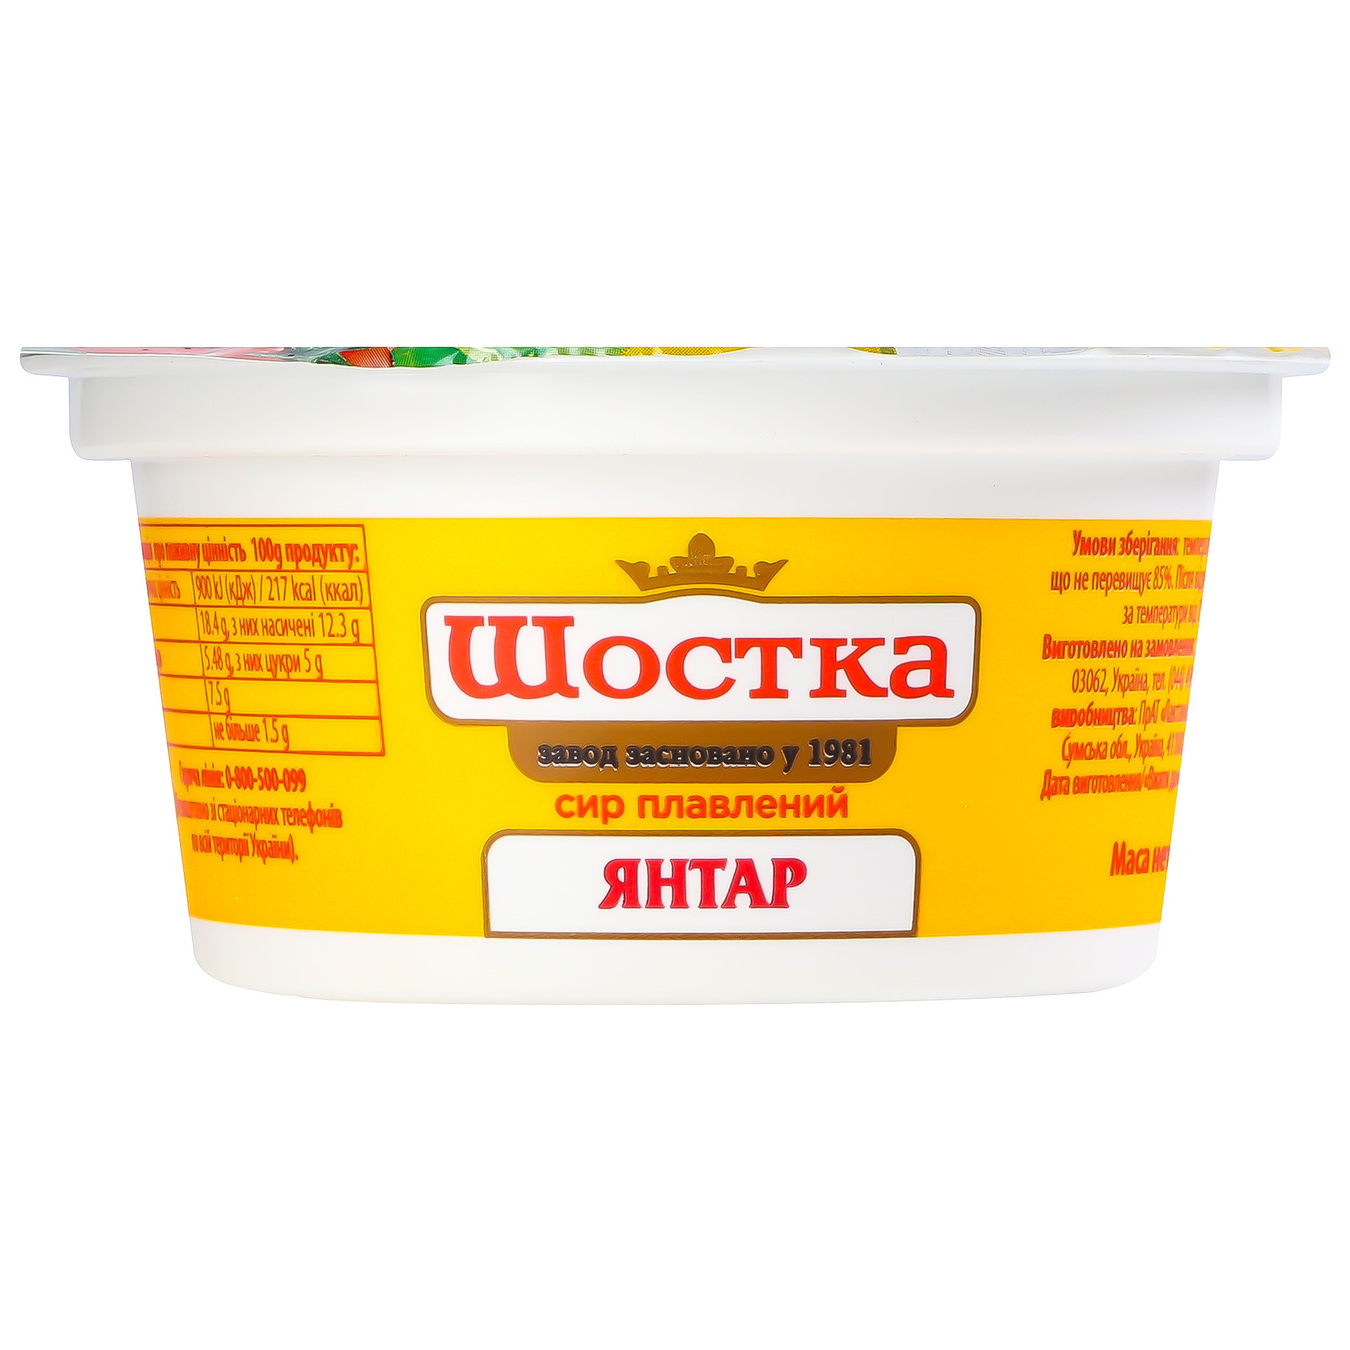 Shostka Yantar Processed Cheese 55% 150g 4